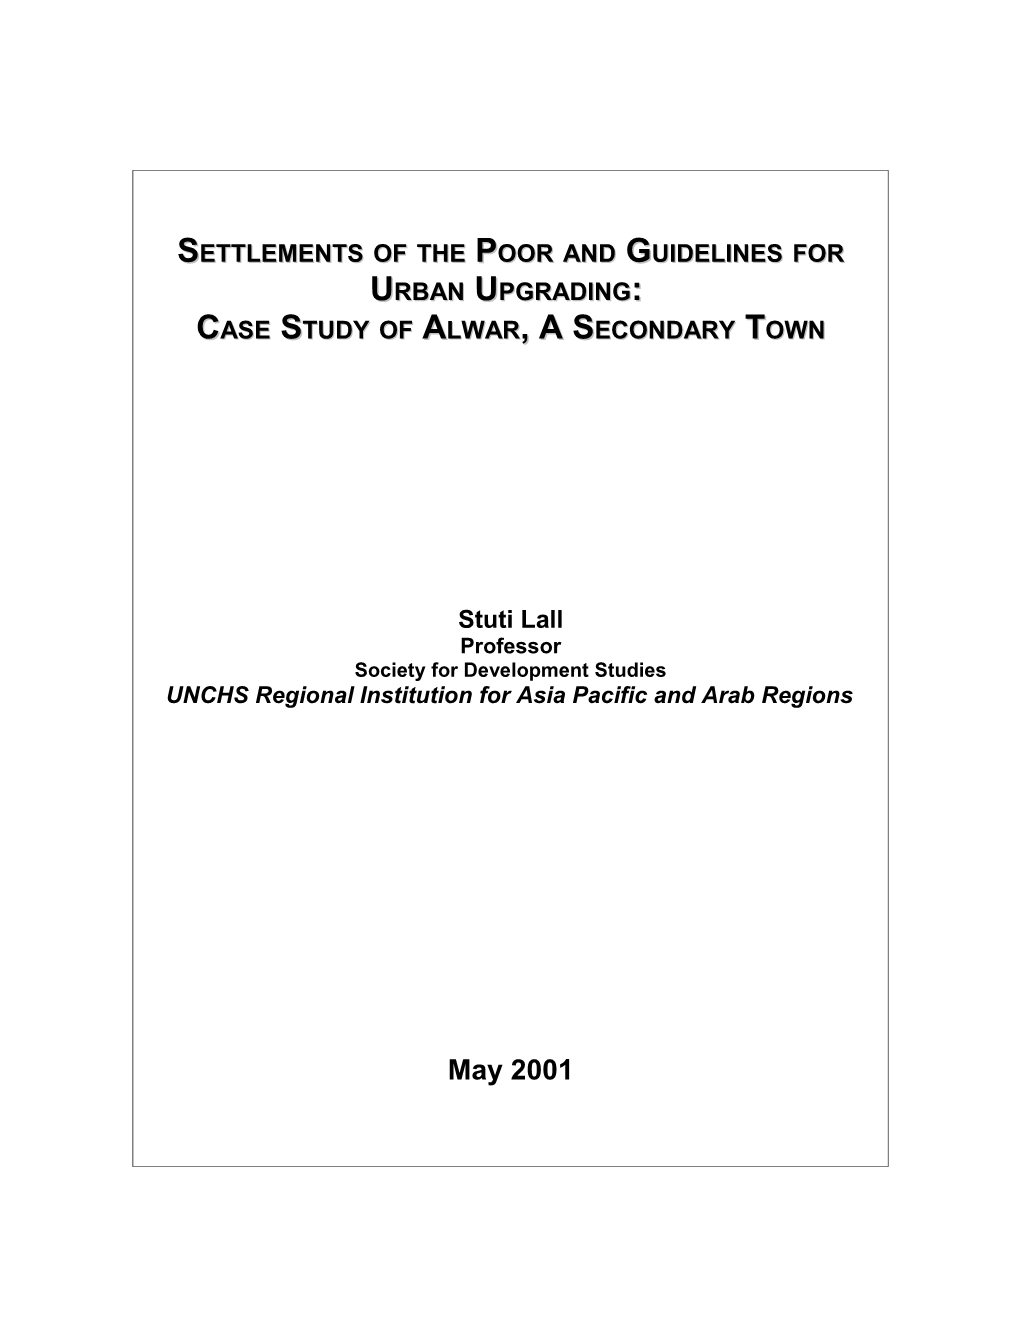 Regulations for Urban Upgrading Case Study of Alwar